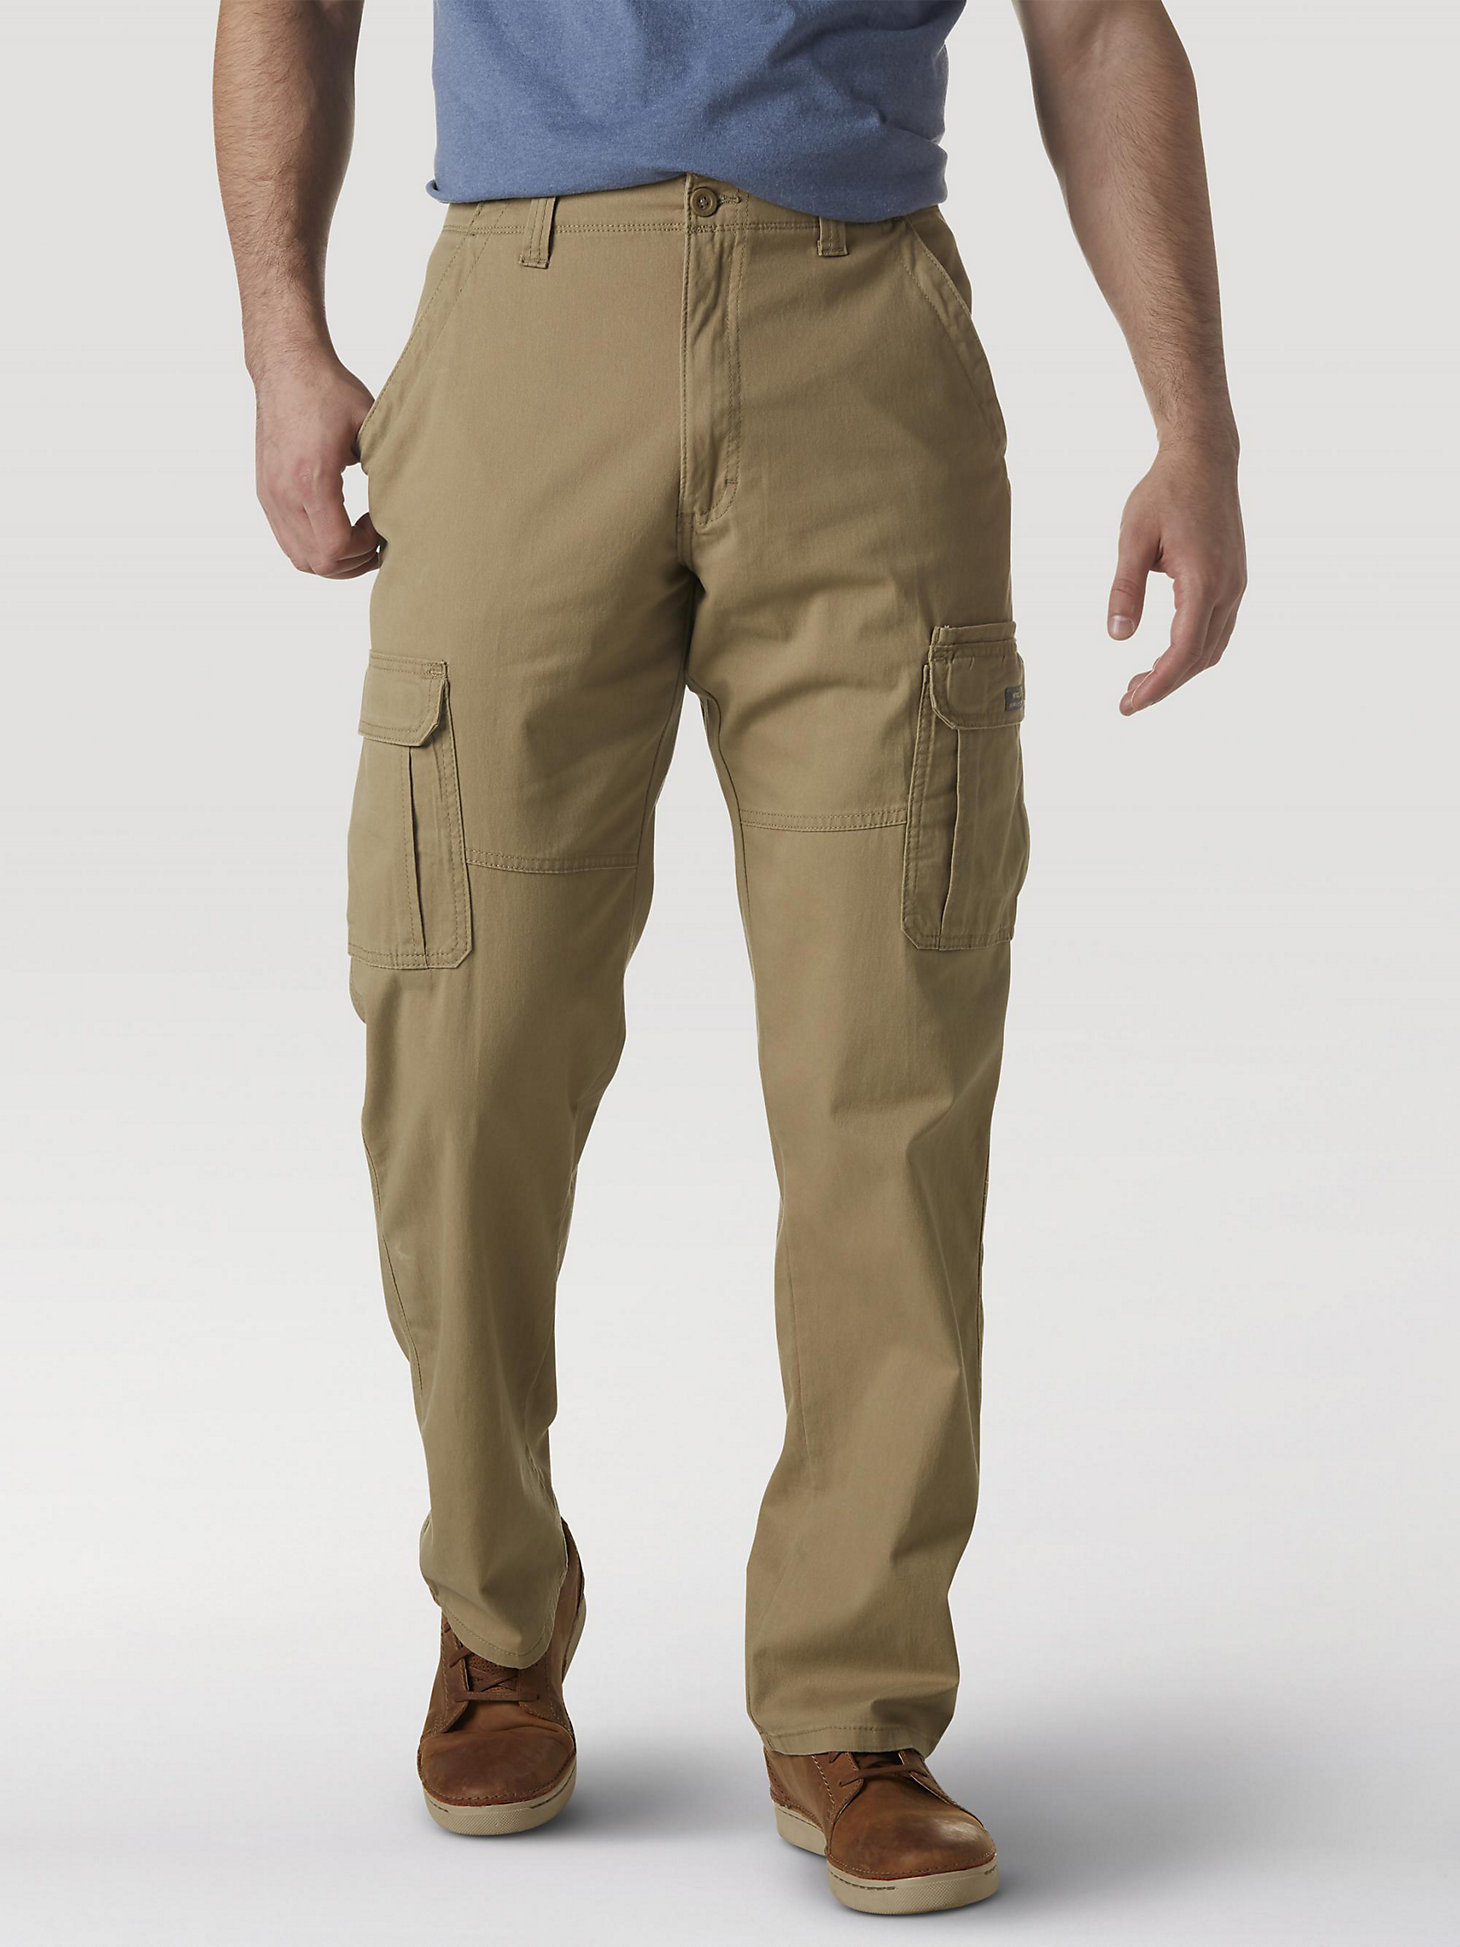 BASS10 slacks Brown 14Y KIDS FASHION Trousers Elegant discount 83% 